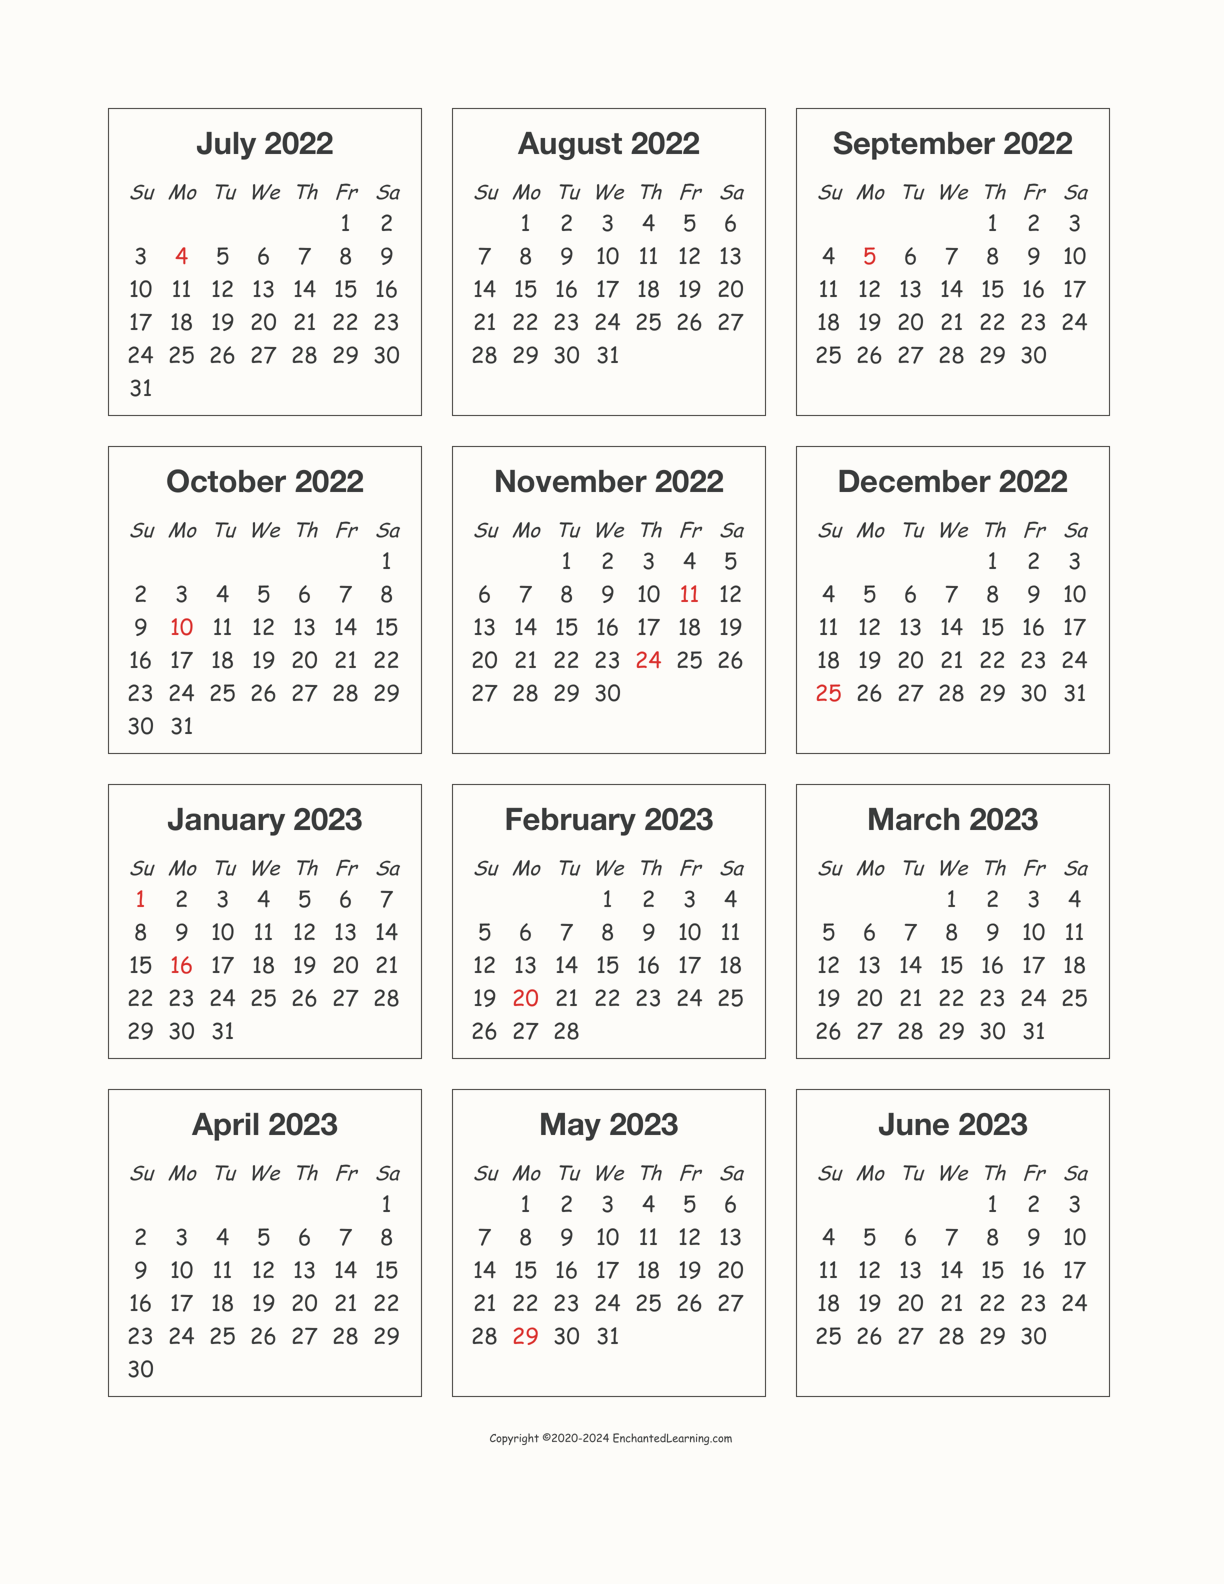 Ucf Spring 2022 Academic Calendar